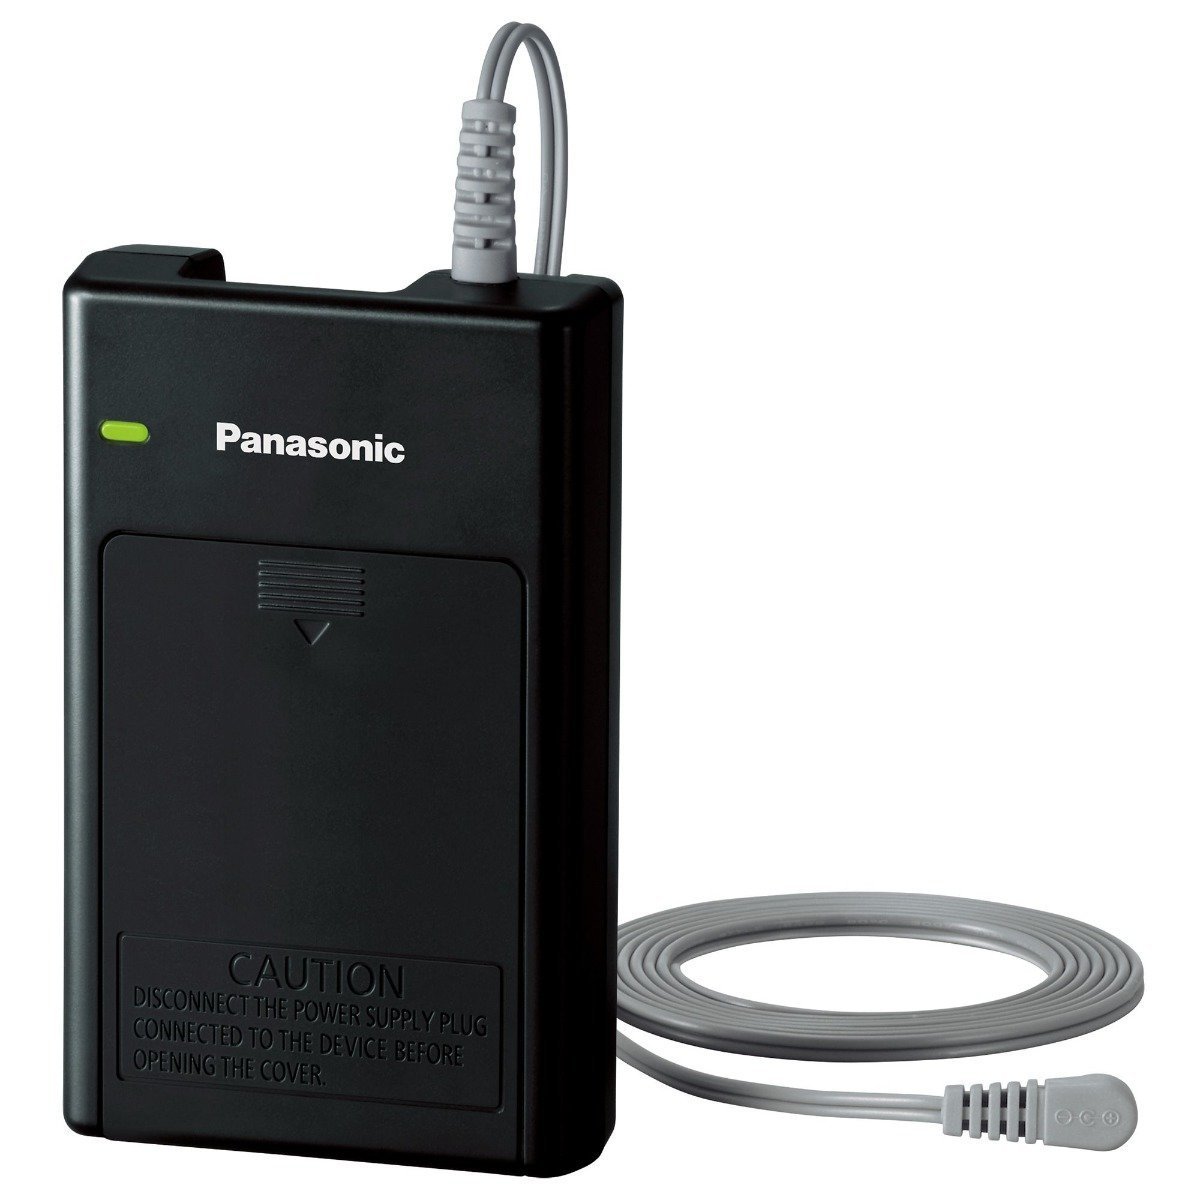 Litijum jonska Panasonic KX-HNP100FXB rezervna baterija za Hub, kamere (KX-HNC600FX,KX-HNC200FX) i sirenu (KX-HNS105FX).